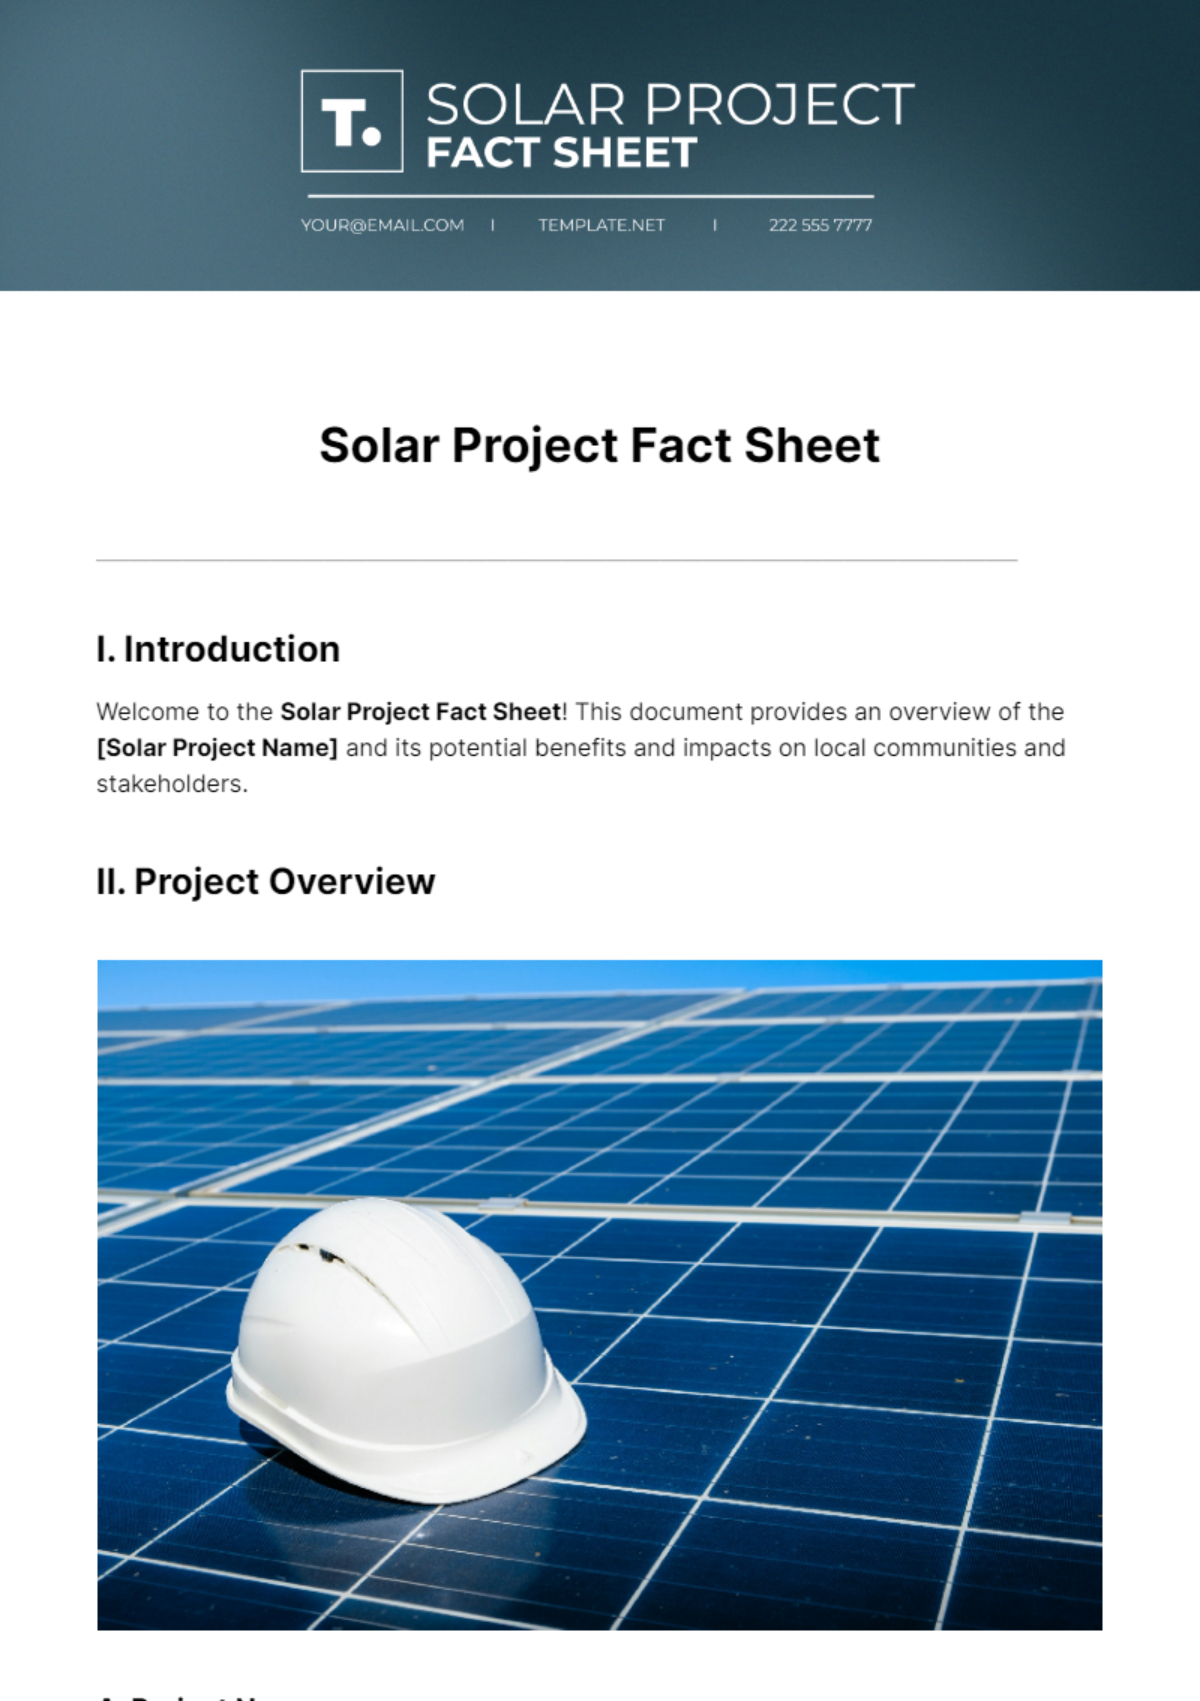 Solar Project Fact Sheet Template